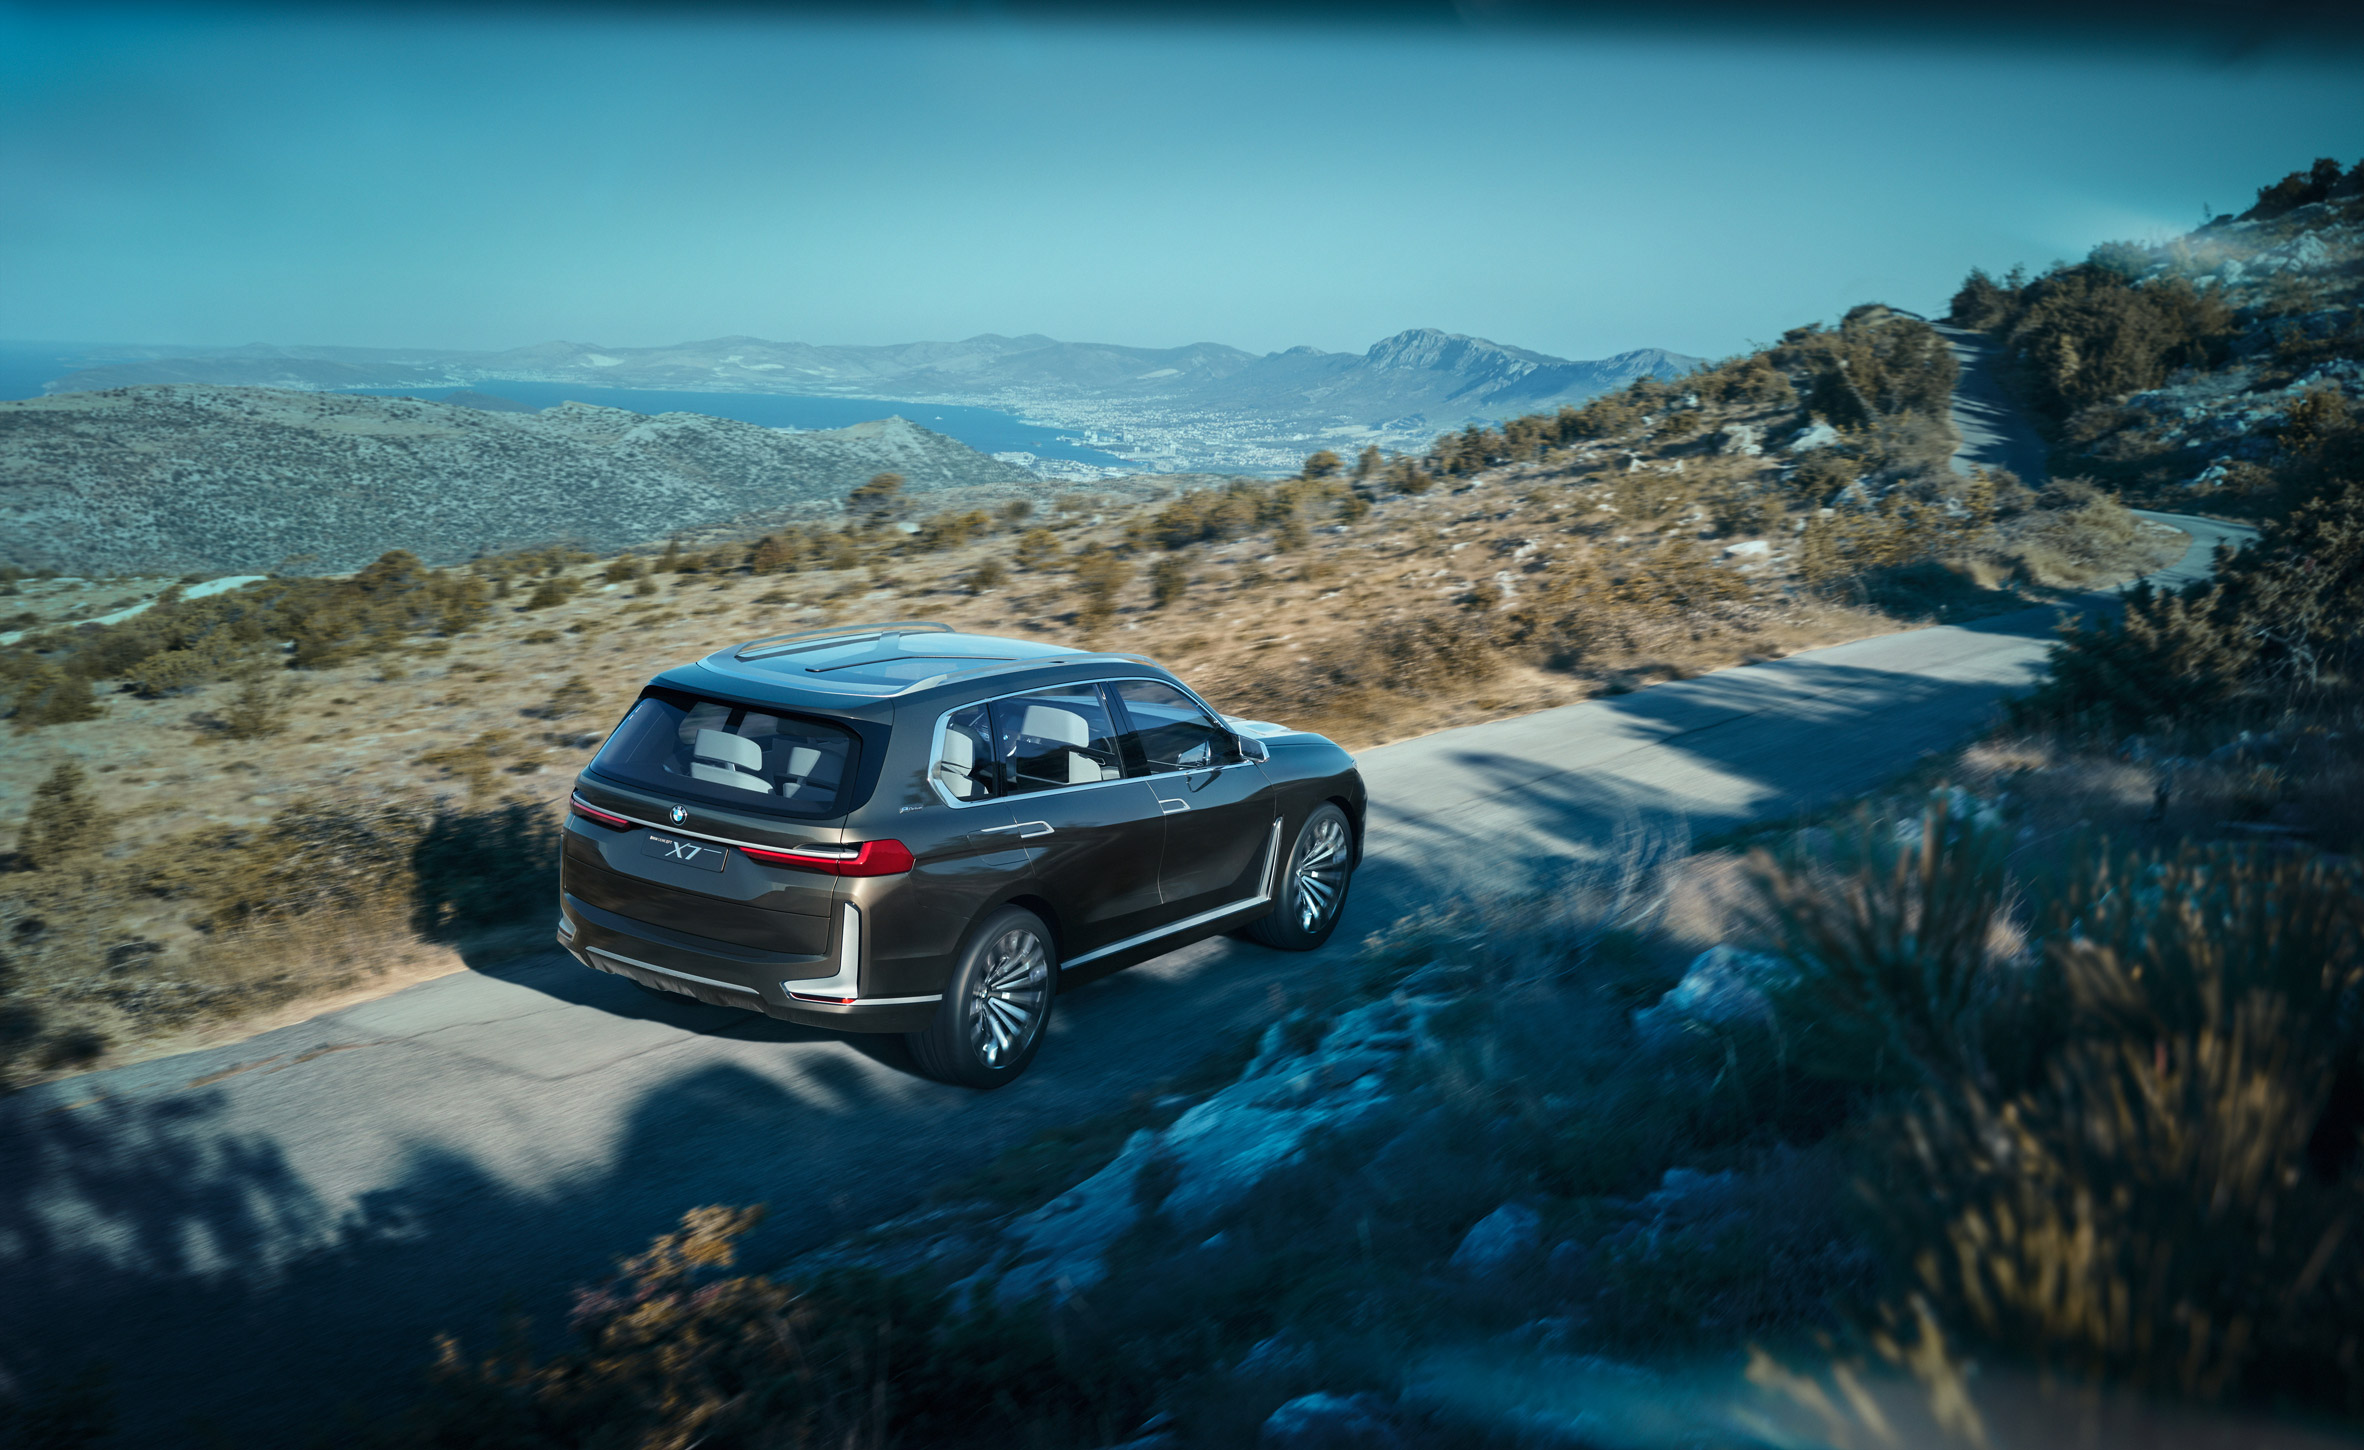 BMW unveils spacious X7 concept car as part of luxury vehicle range-22